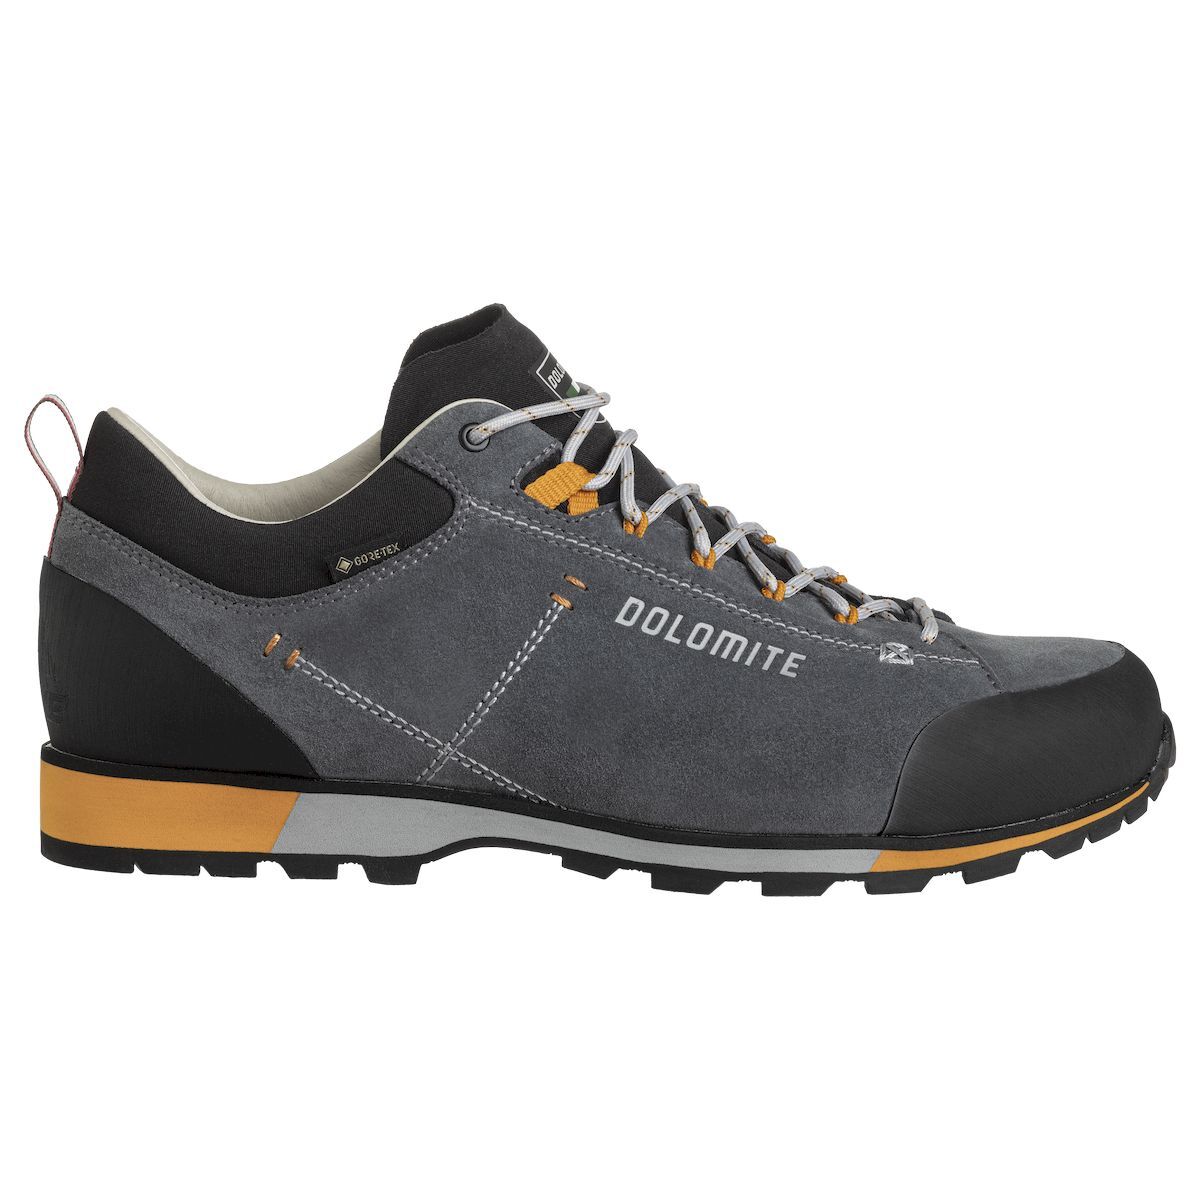 Dolomite 54 Hike Low EVO GTX - Hiking shoes - Men's